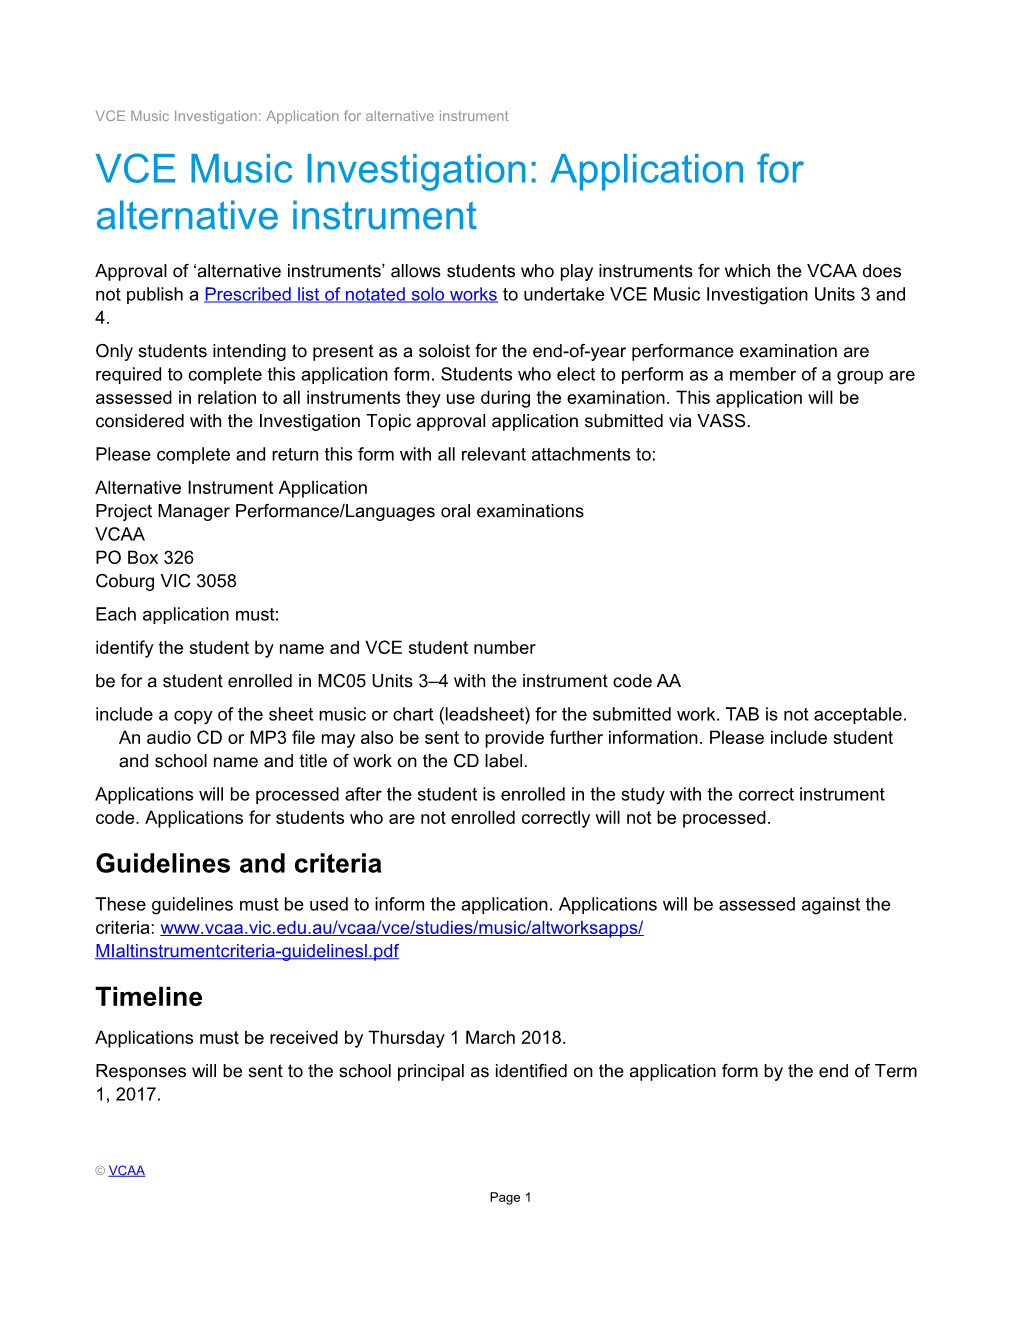 VCE Music Investigation: Application for Alternative Instrument